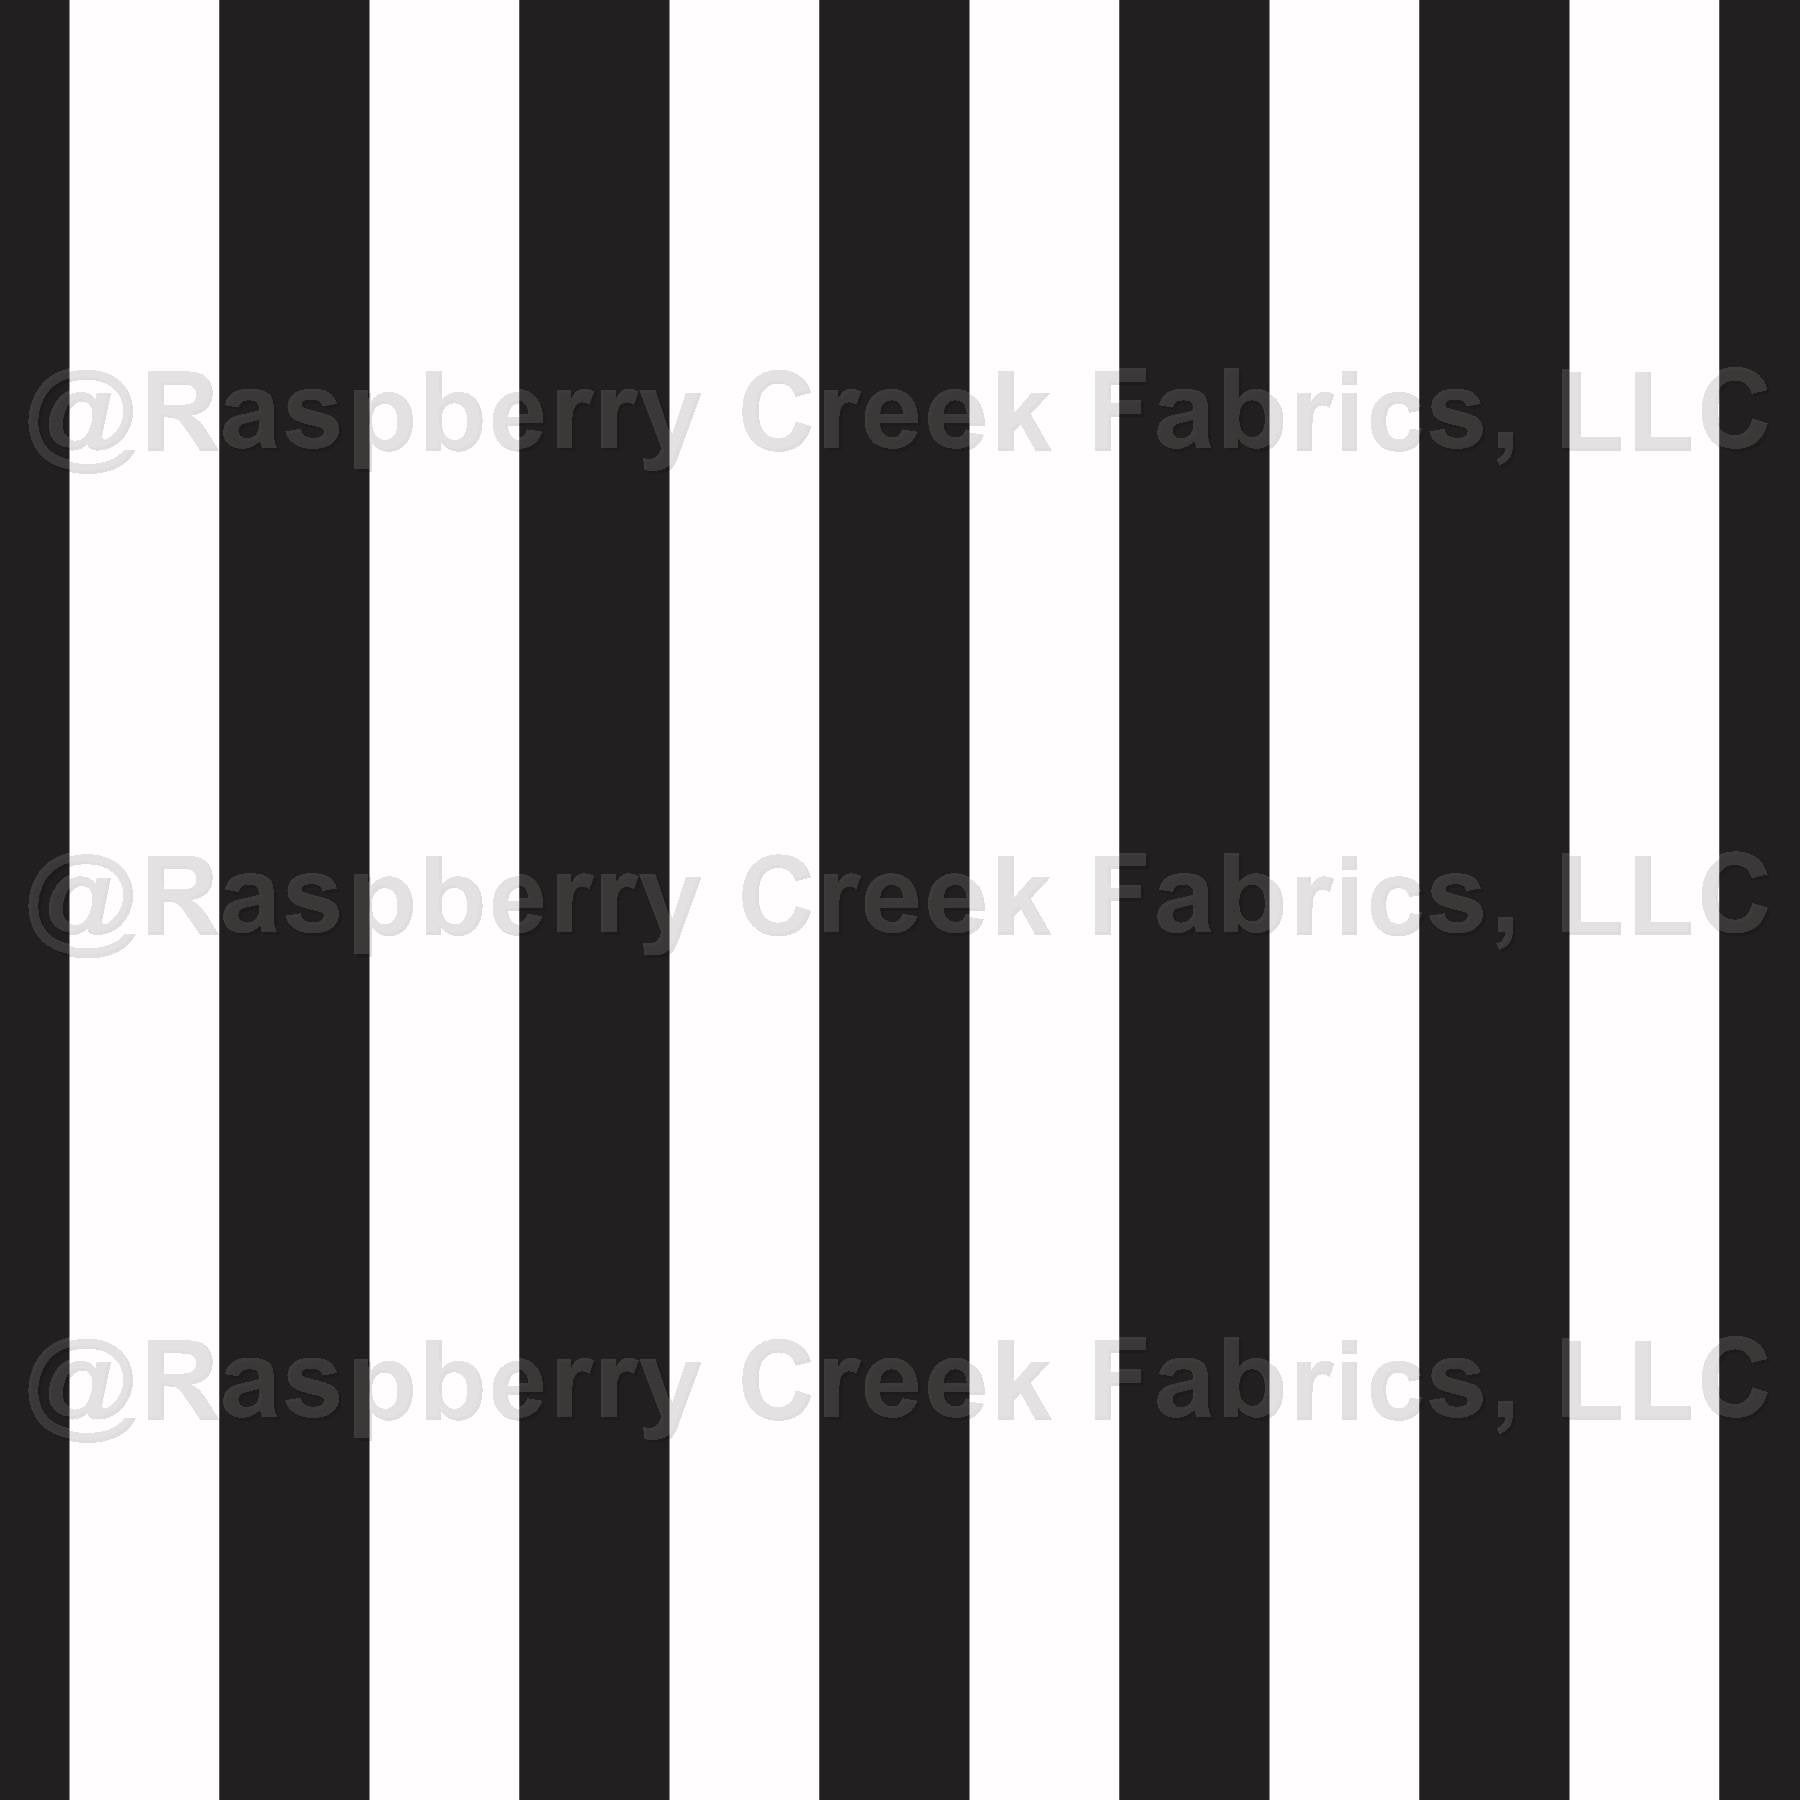 Black and white Vertical stripe Fabric, Raspberry Creek Fabrics